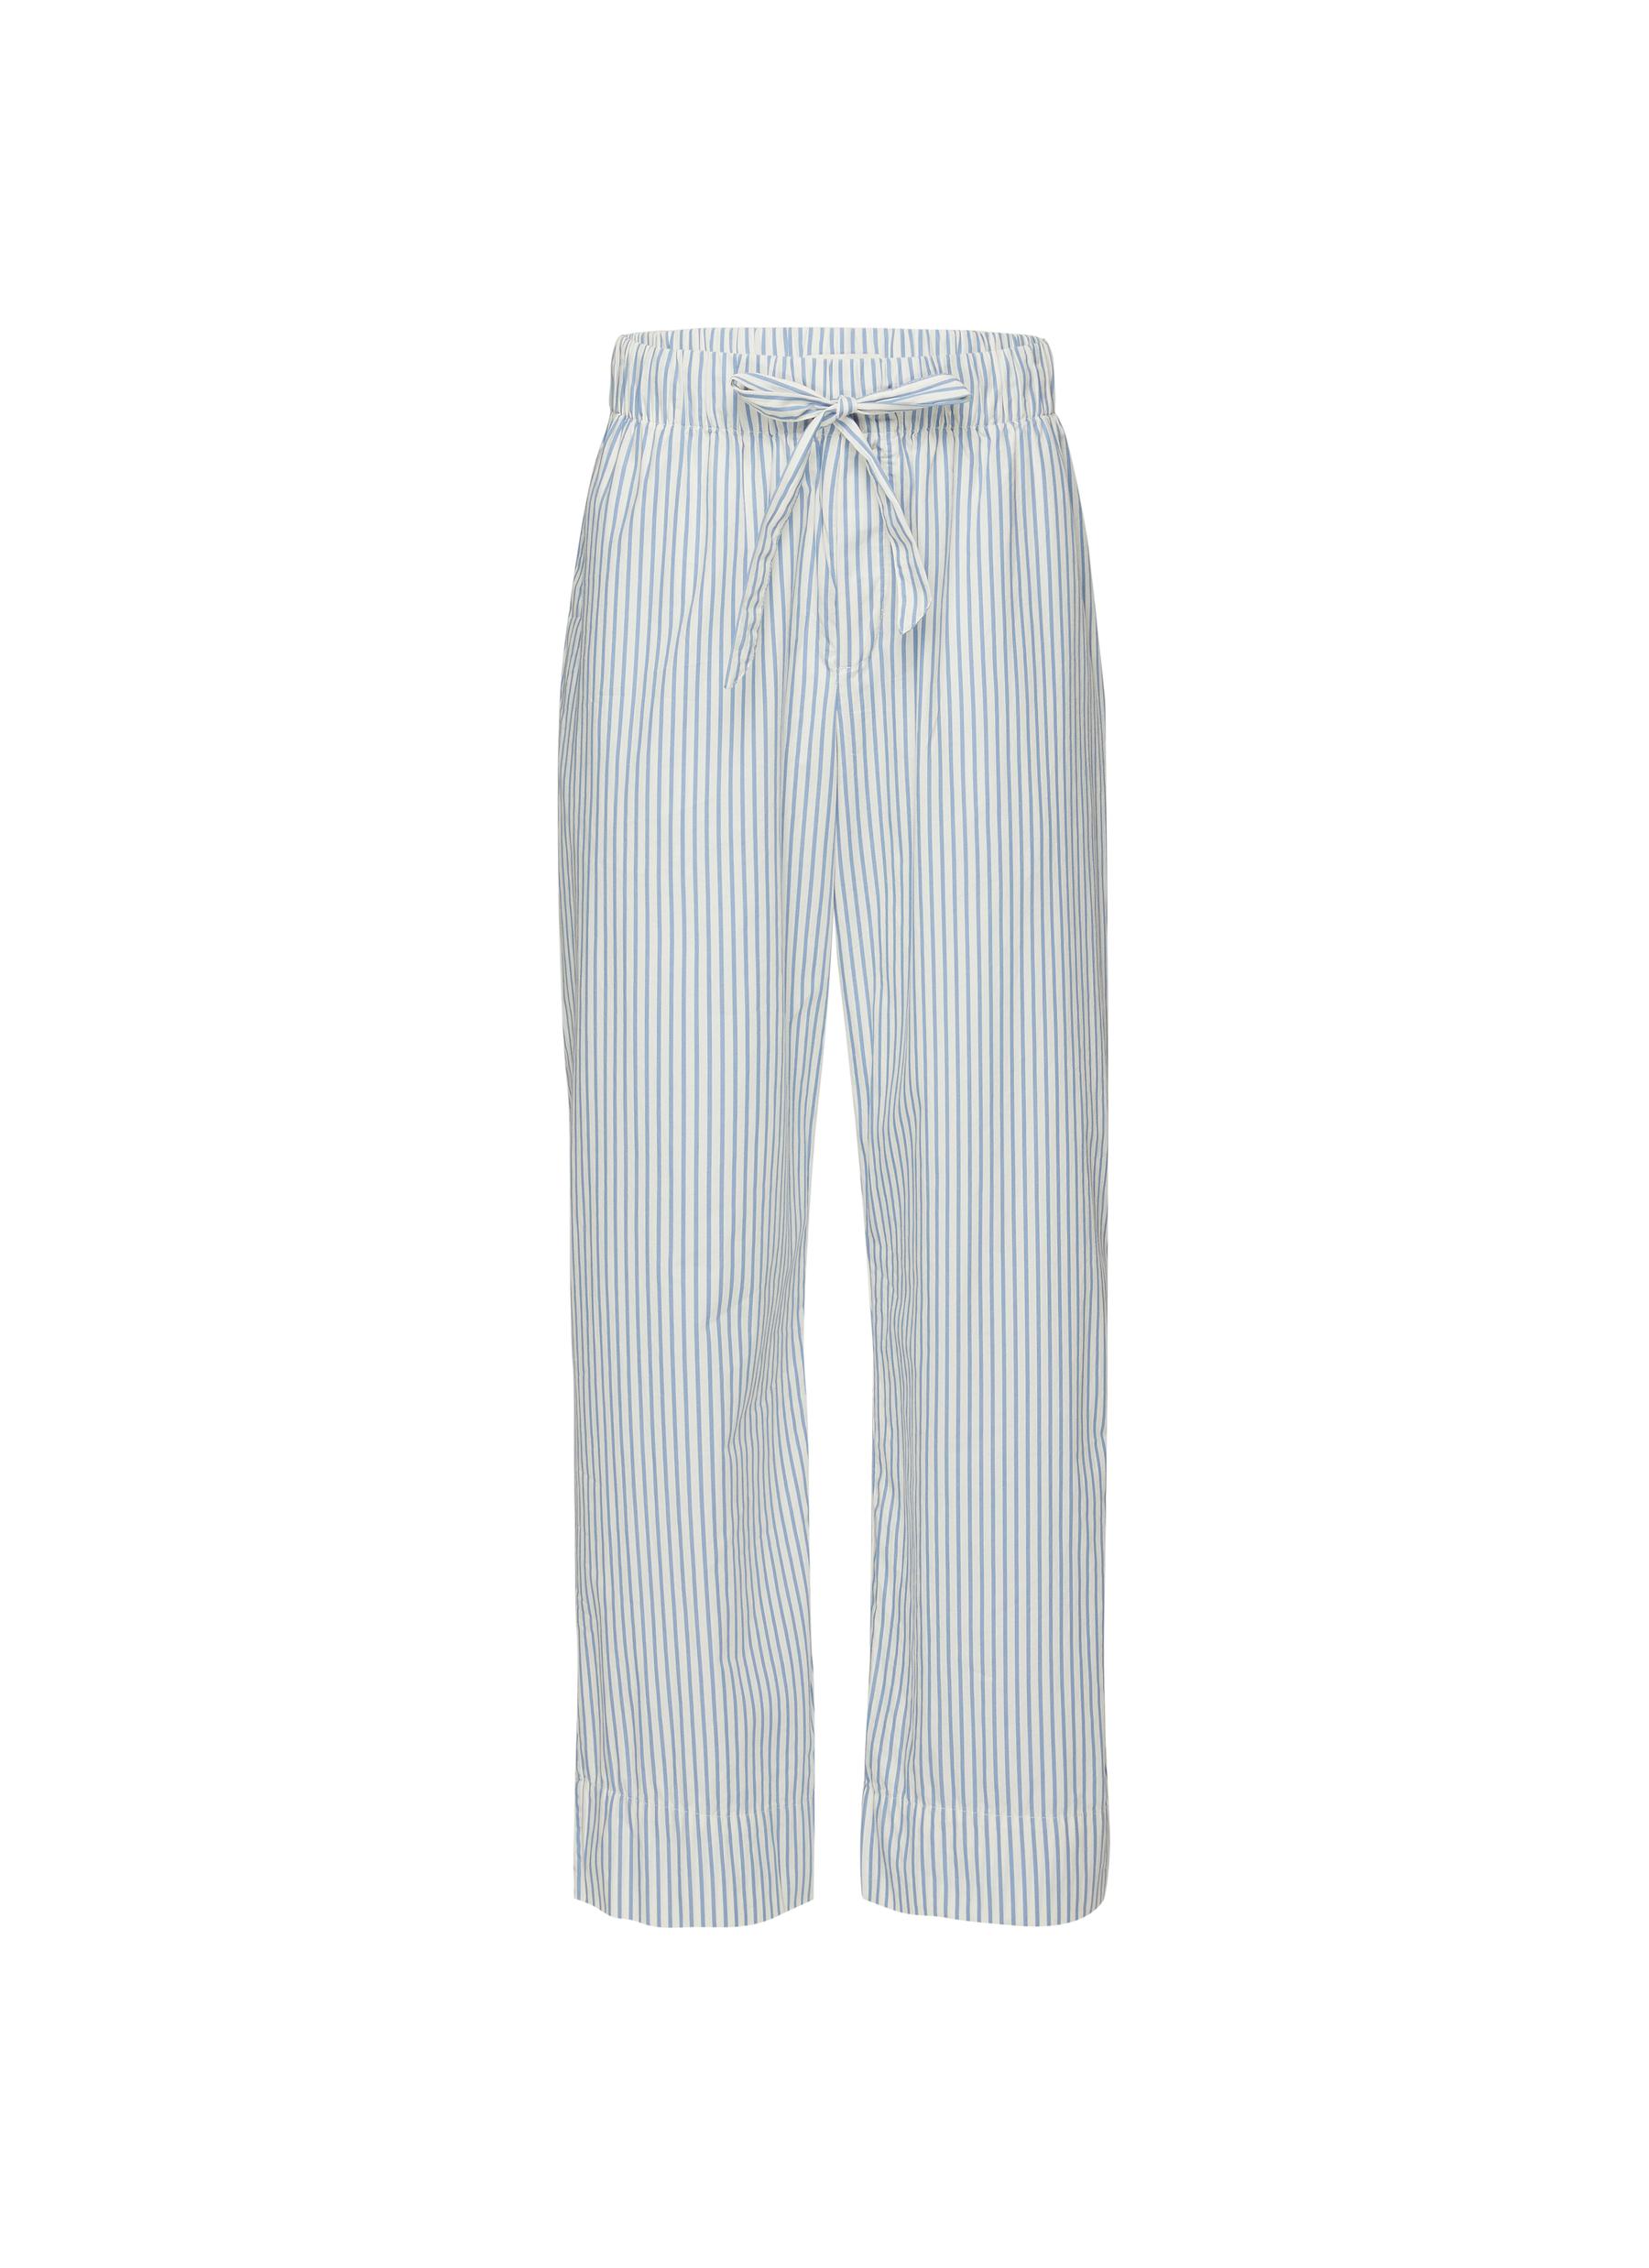 Tekla Kids' Medium Poplin Pyjamas Pants - Placid Stripes